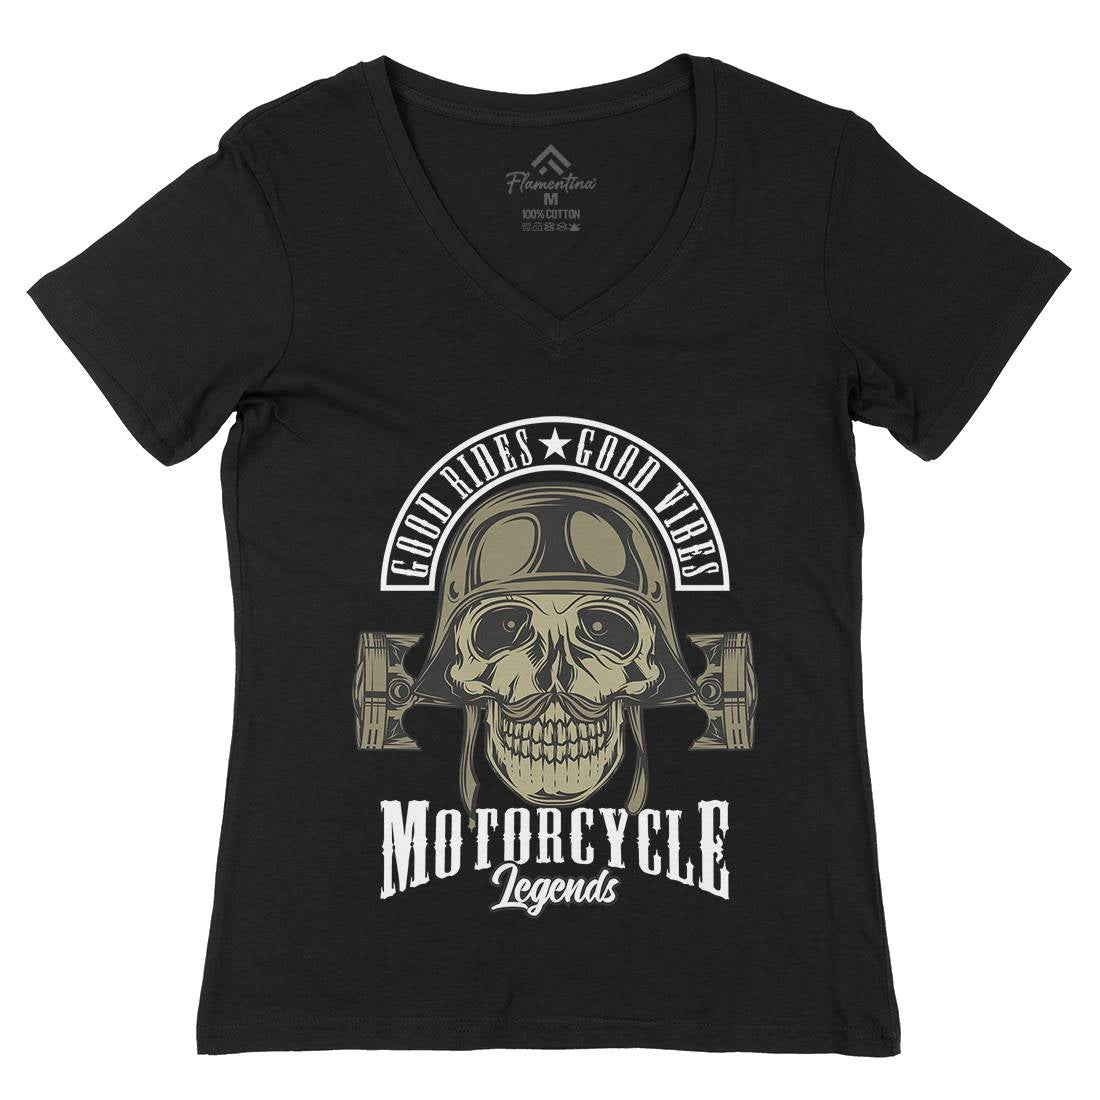 Legends Womens Organic V-Neck T-Shirt Motorcycles C888